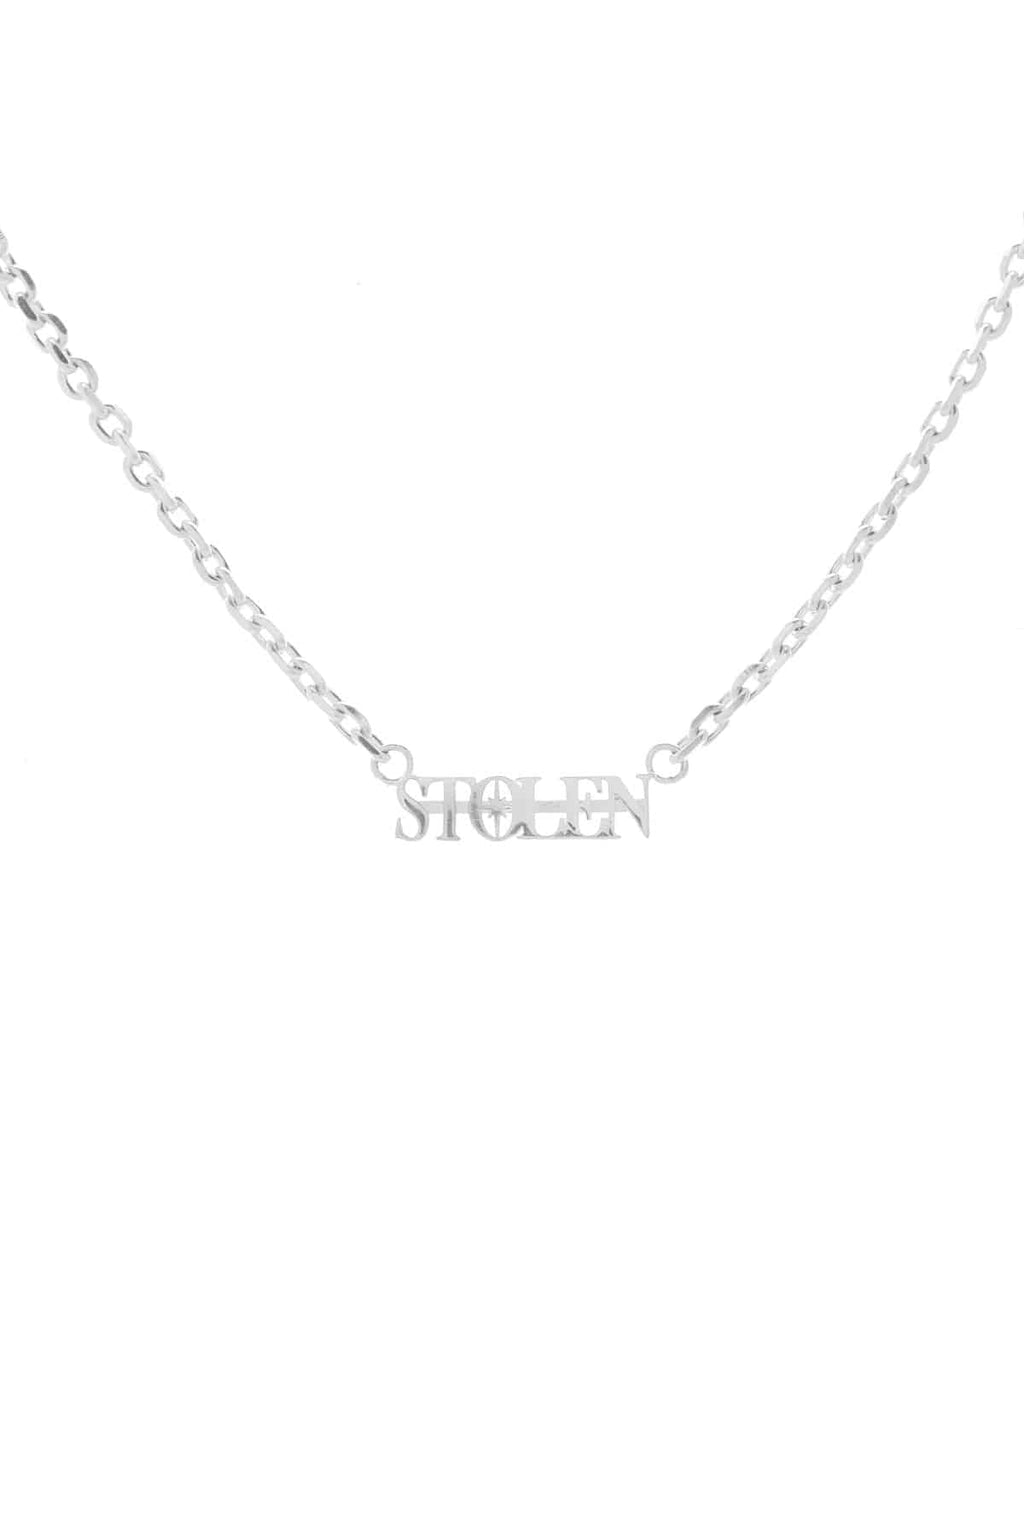 Stolen Serif Necklace - Silver